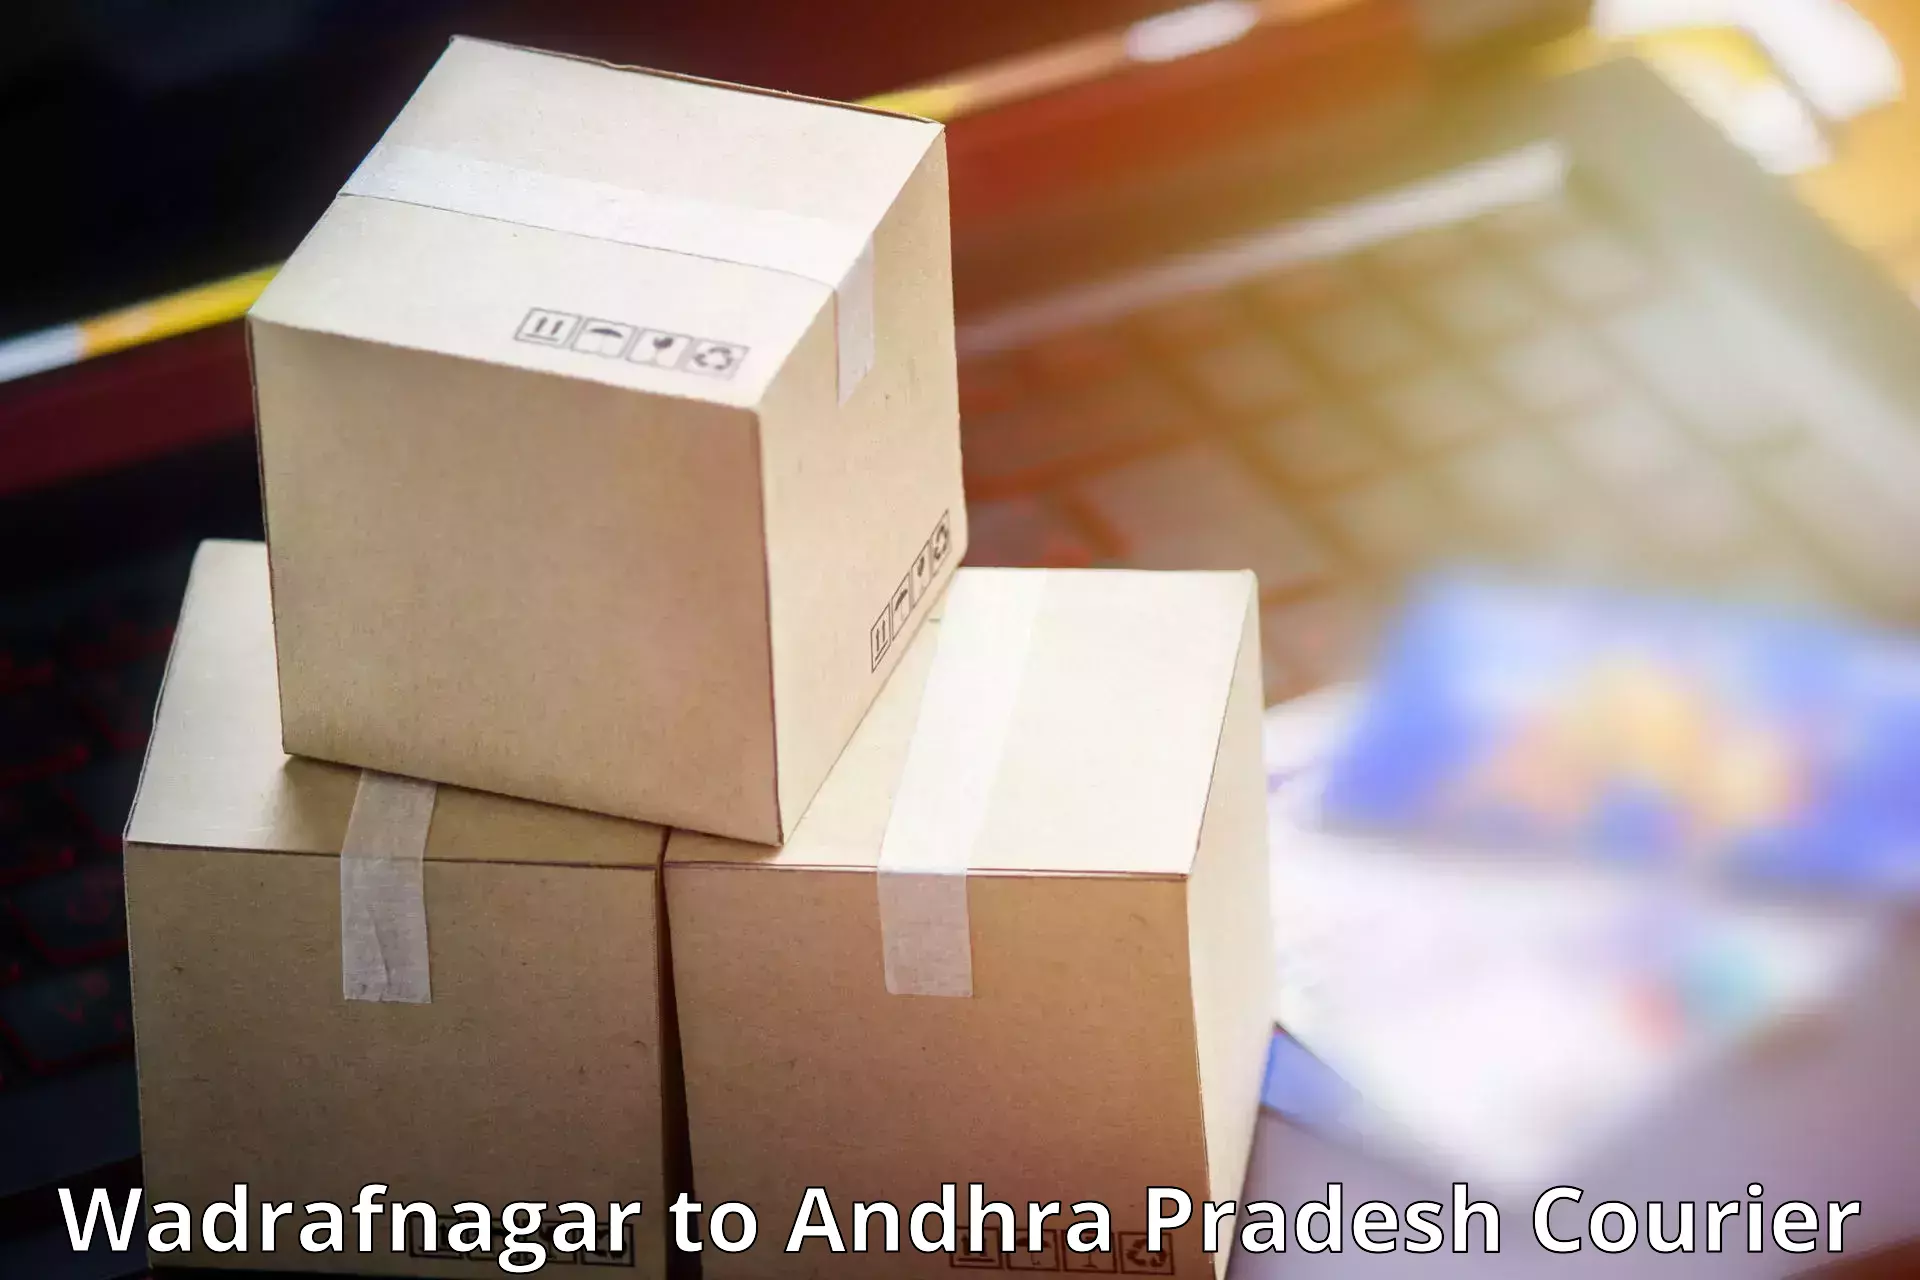 Large package courier Wadrafnagar to Guntur